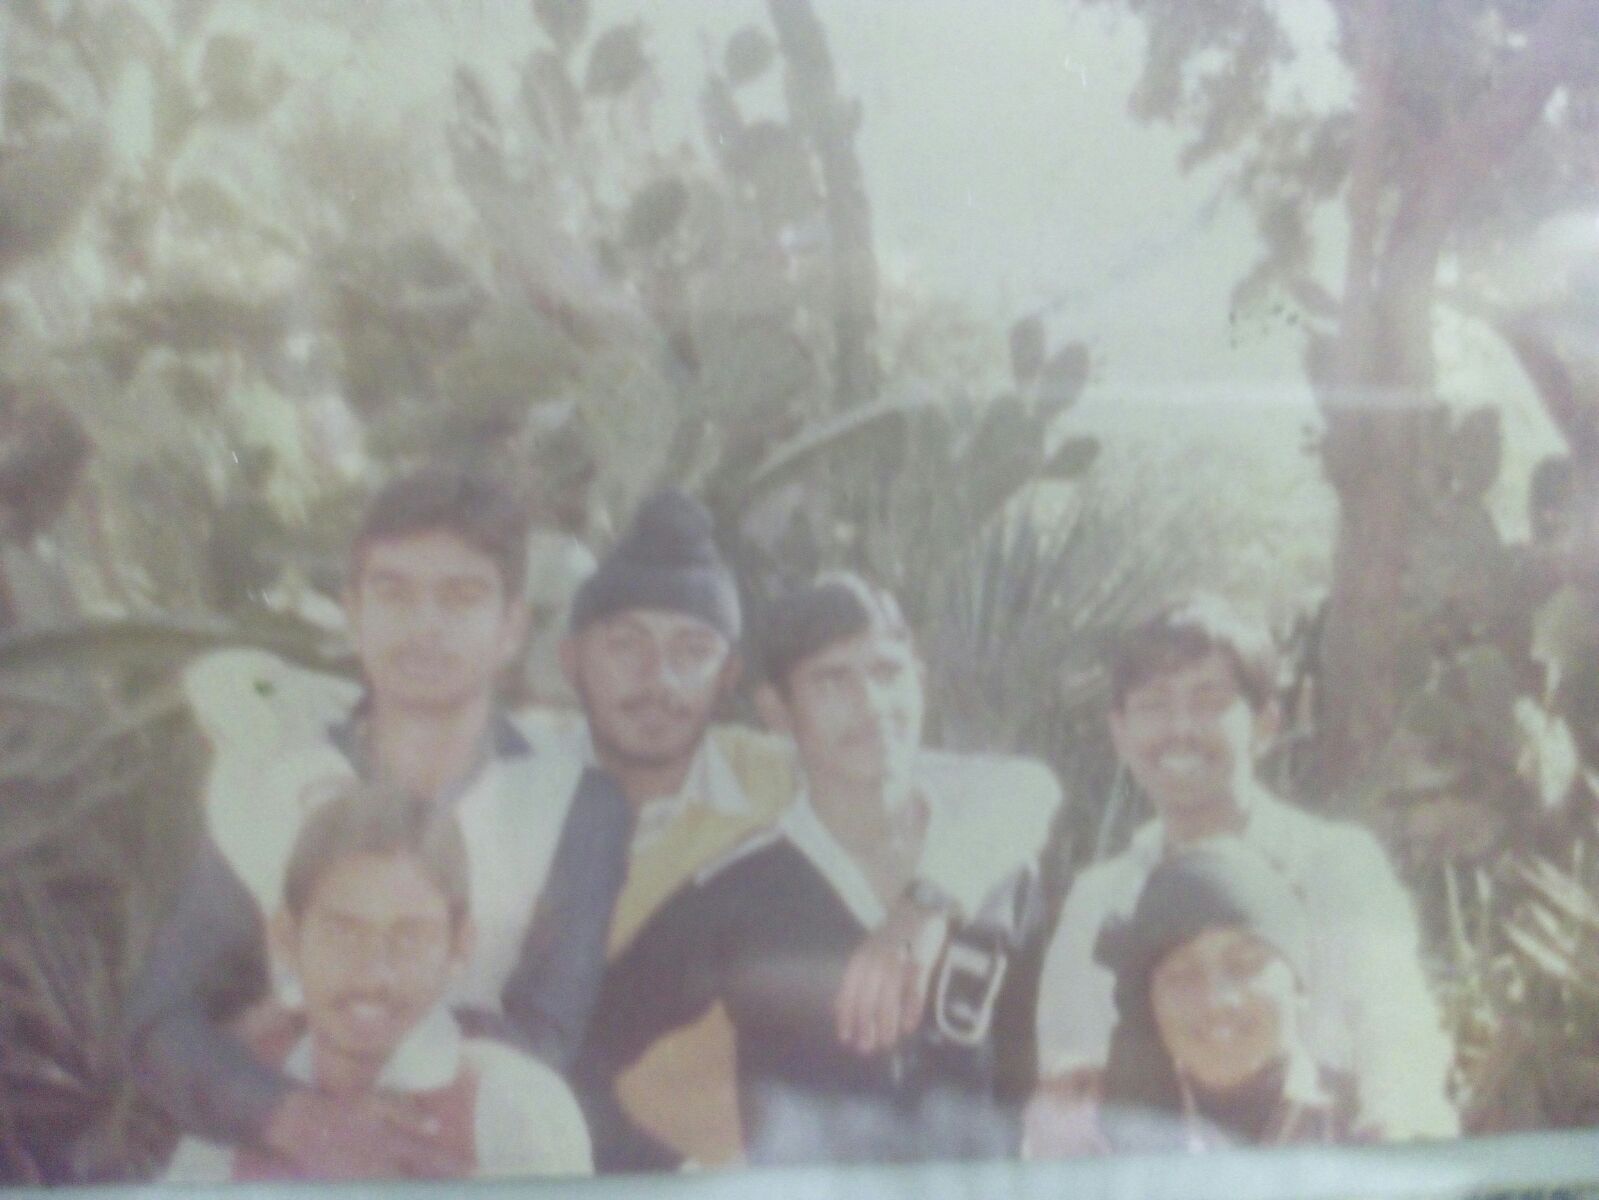 Pradeep Malik with Jitender Gill & Udairaj Singh Tanwar